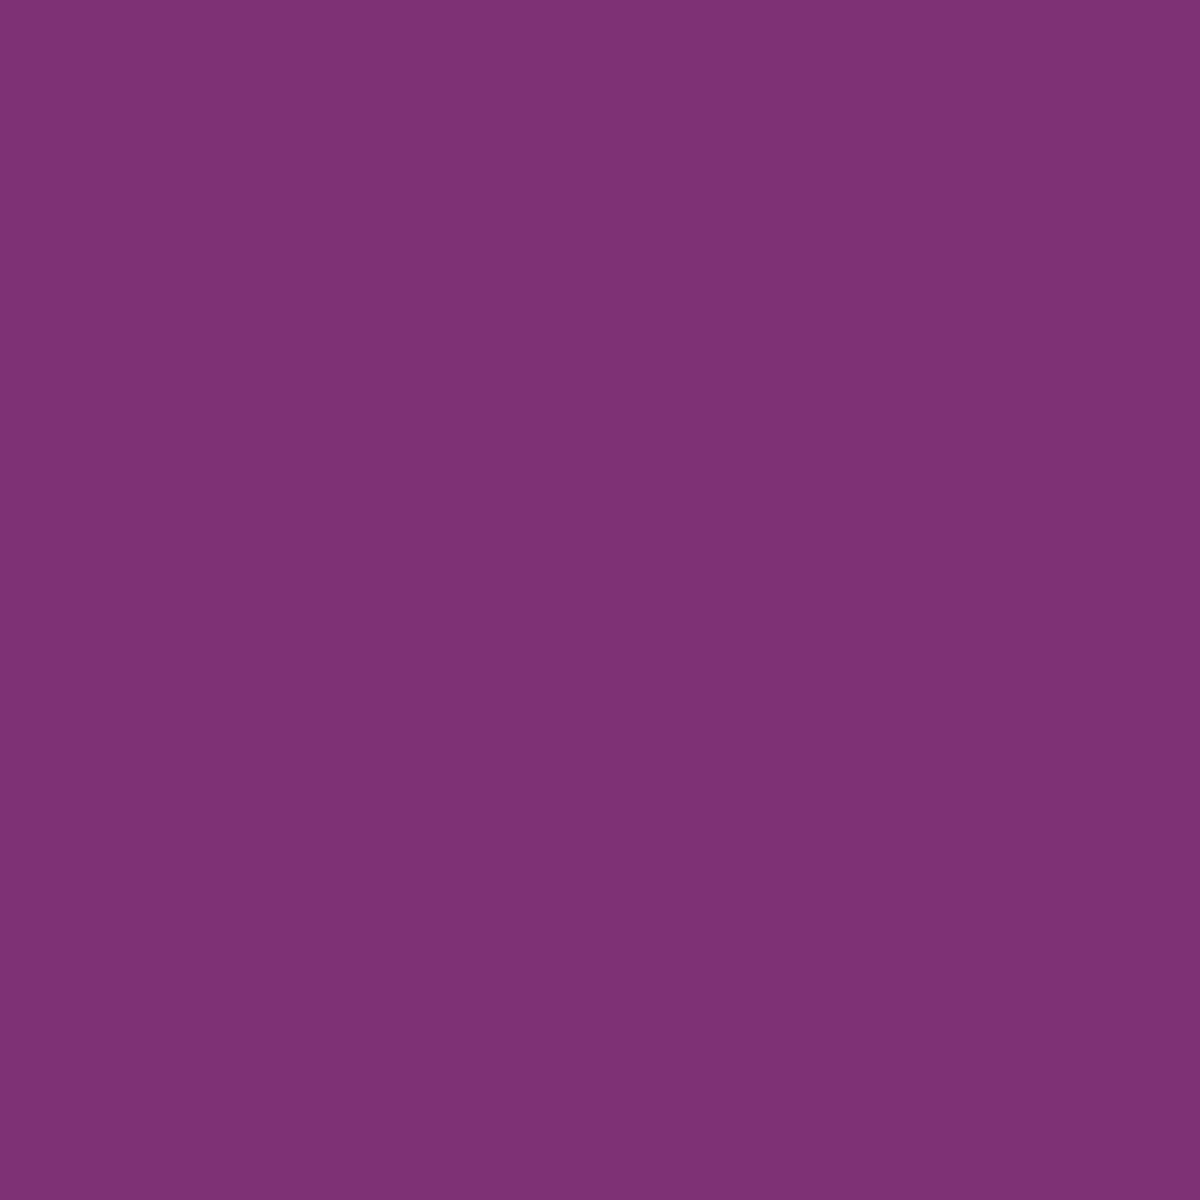 3M Scotchcal pellicola colorata 100-721 viola chiara 1,22m x 25m